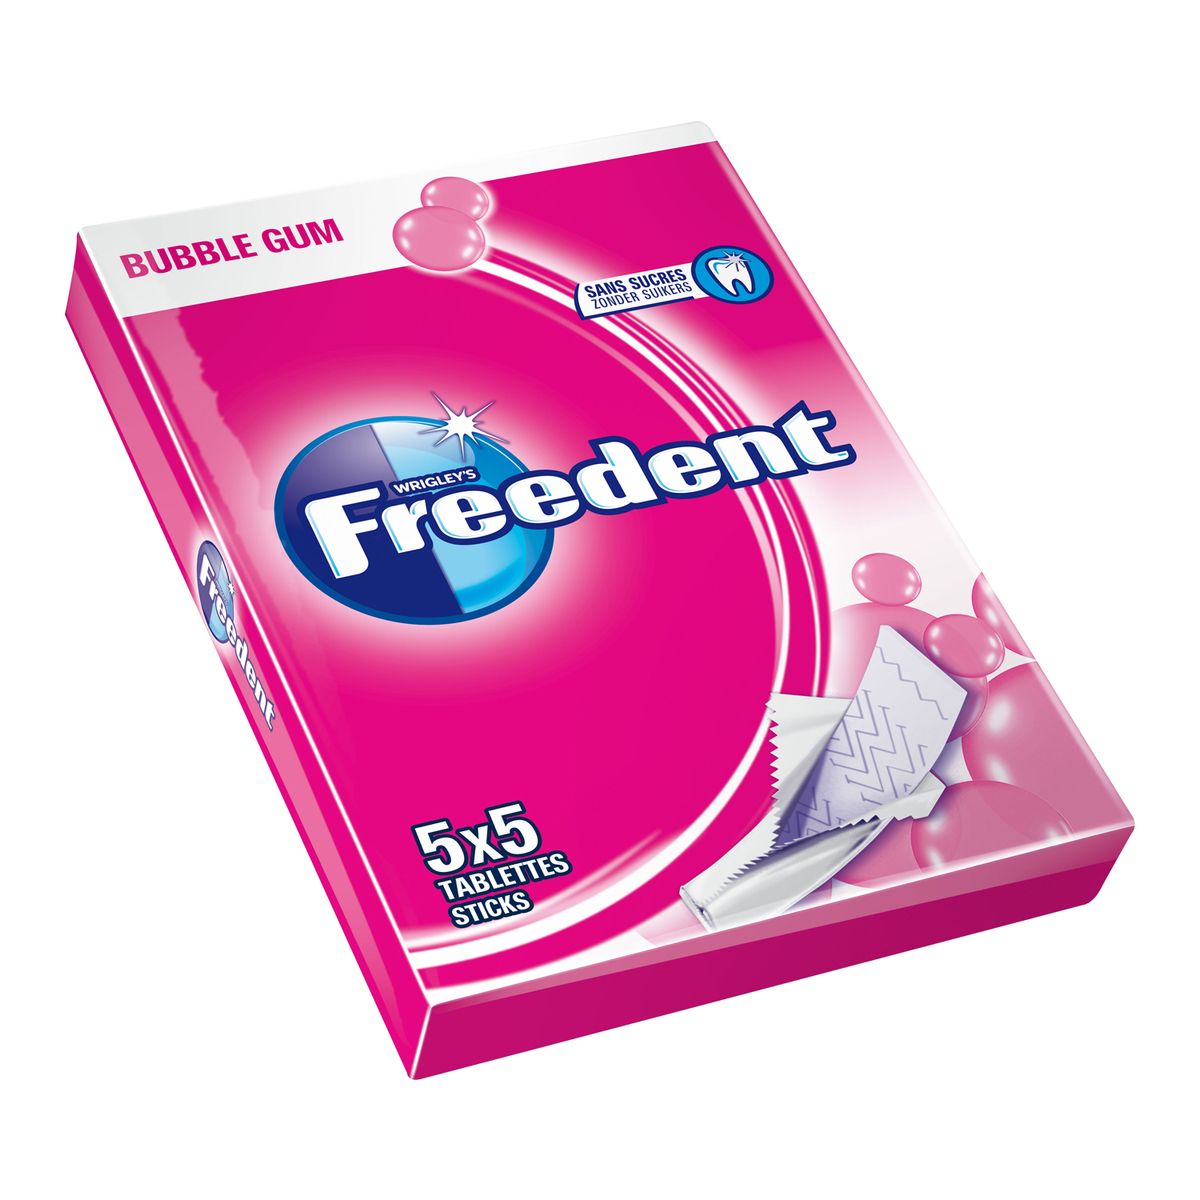 nood Trunk bibliotheek verhouding FREEDENT Freedent bubble gum stick 5x5 -65g pas cher - Auchan.fr